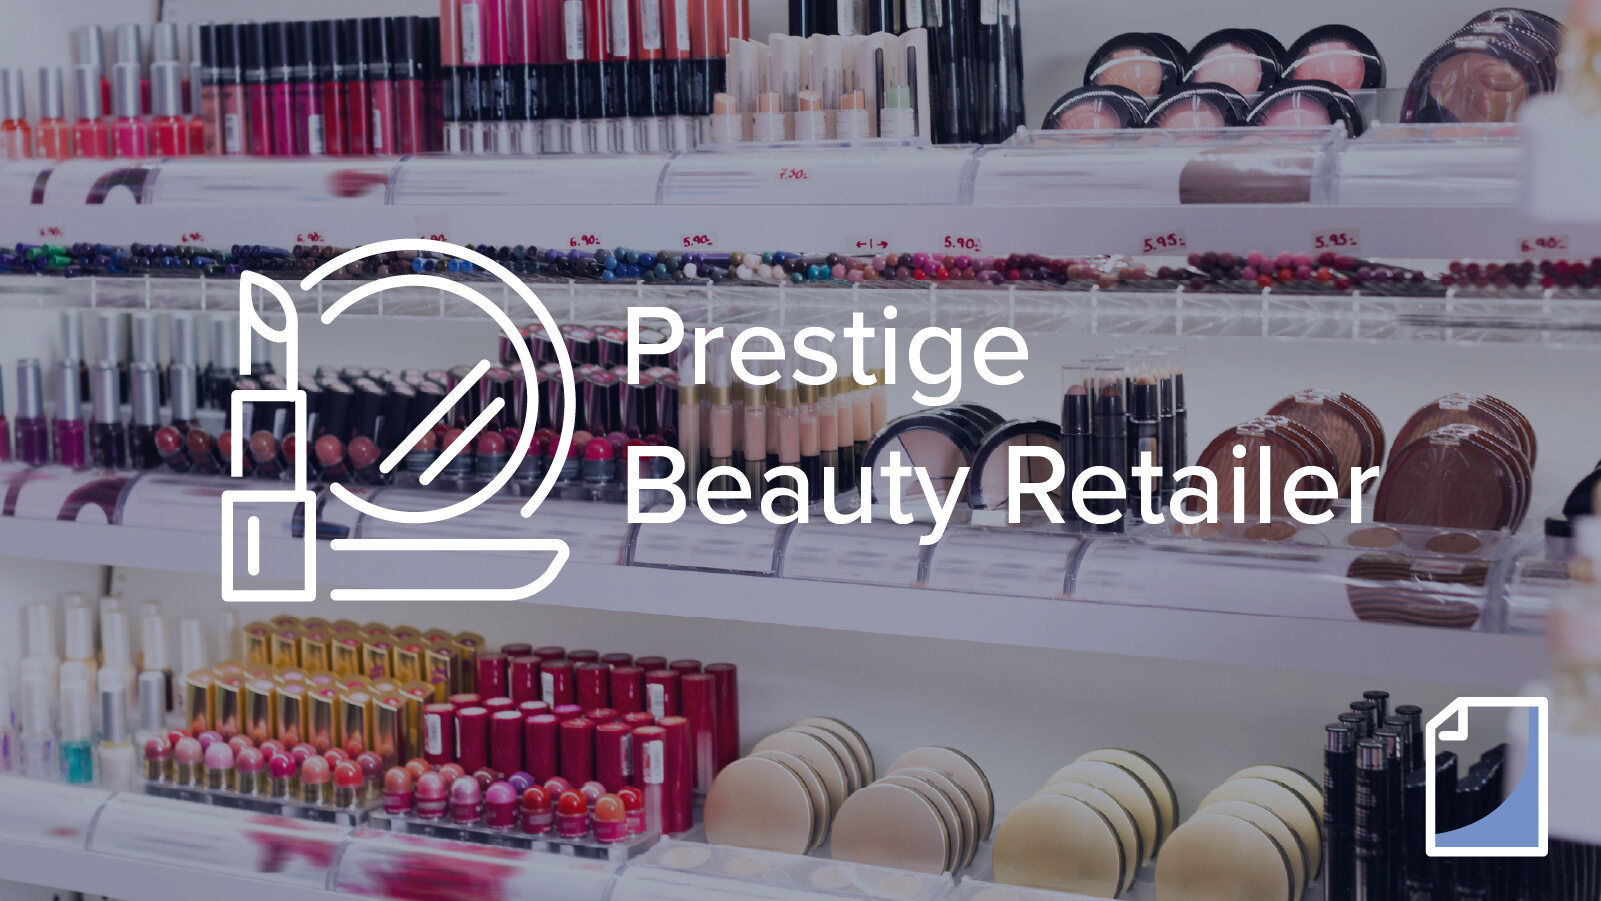 Graphic: Prestige Beauty Retailer logo overlayed on makeup counter